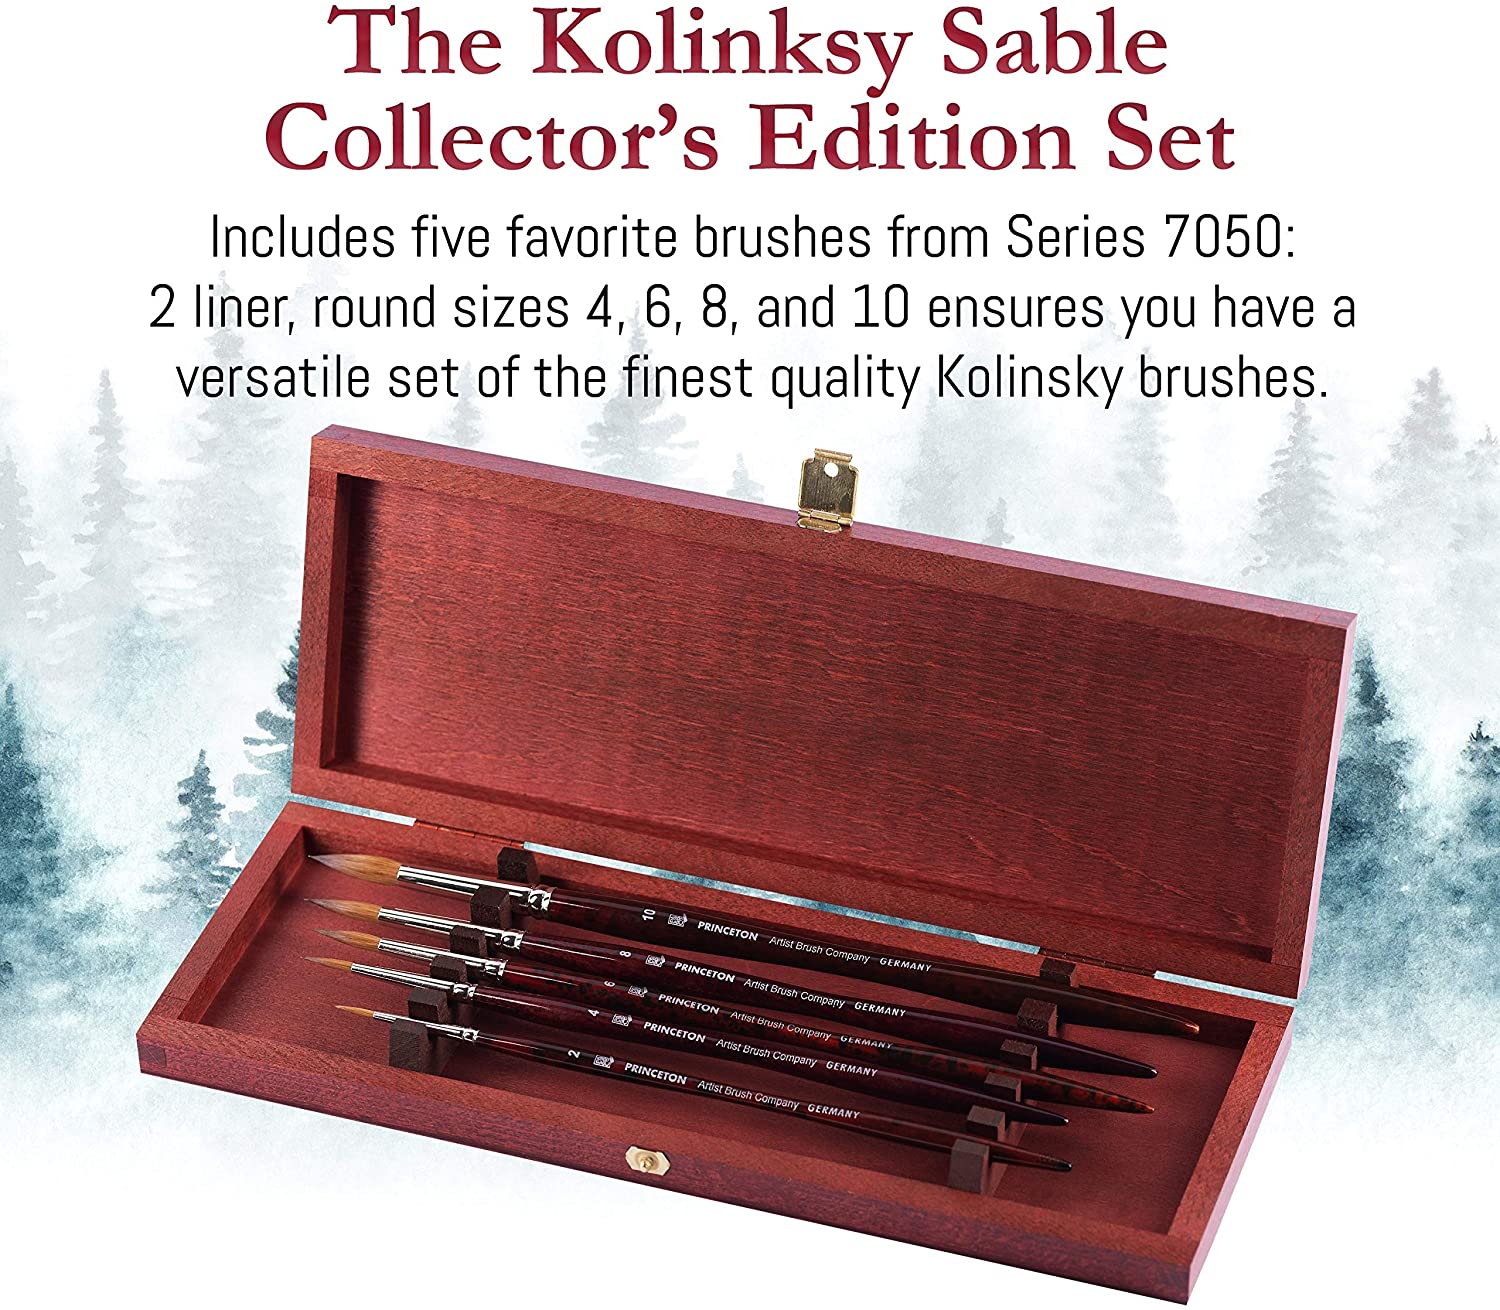 Princeton Artist Brush Co. Collector's Edition Kolinsky Sable Brushes